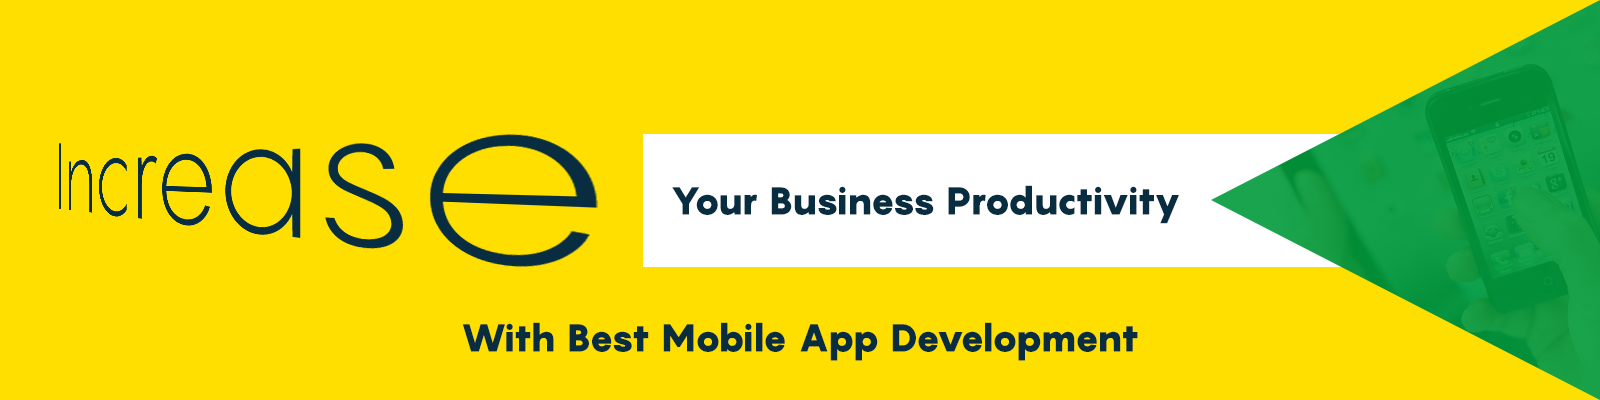 mobile app development company brazil